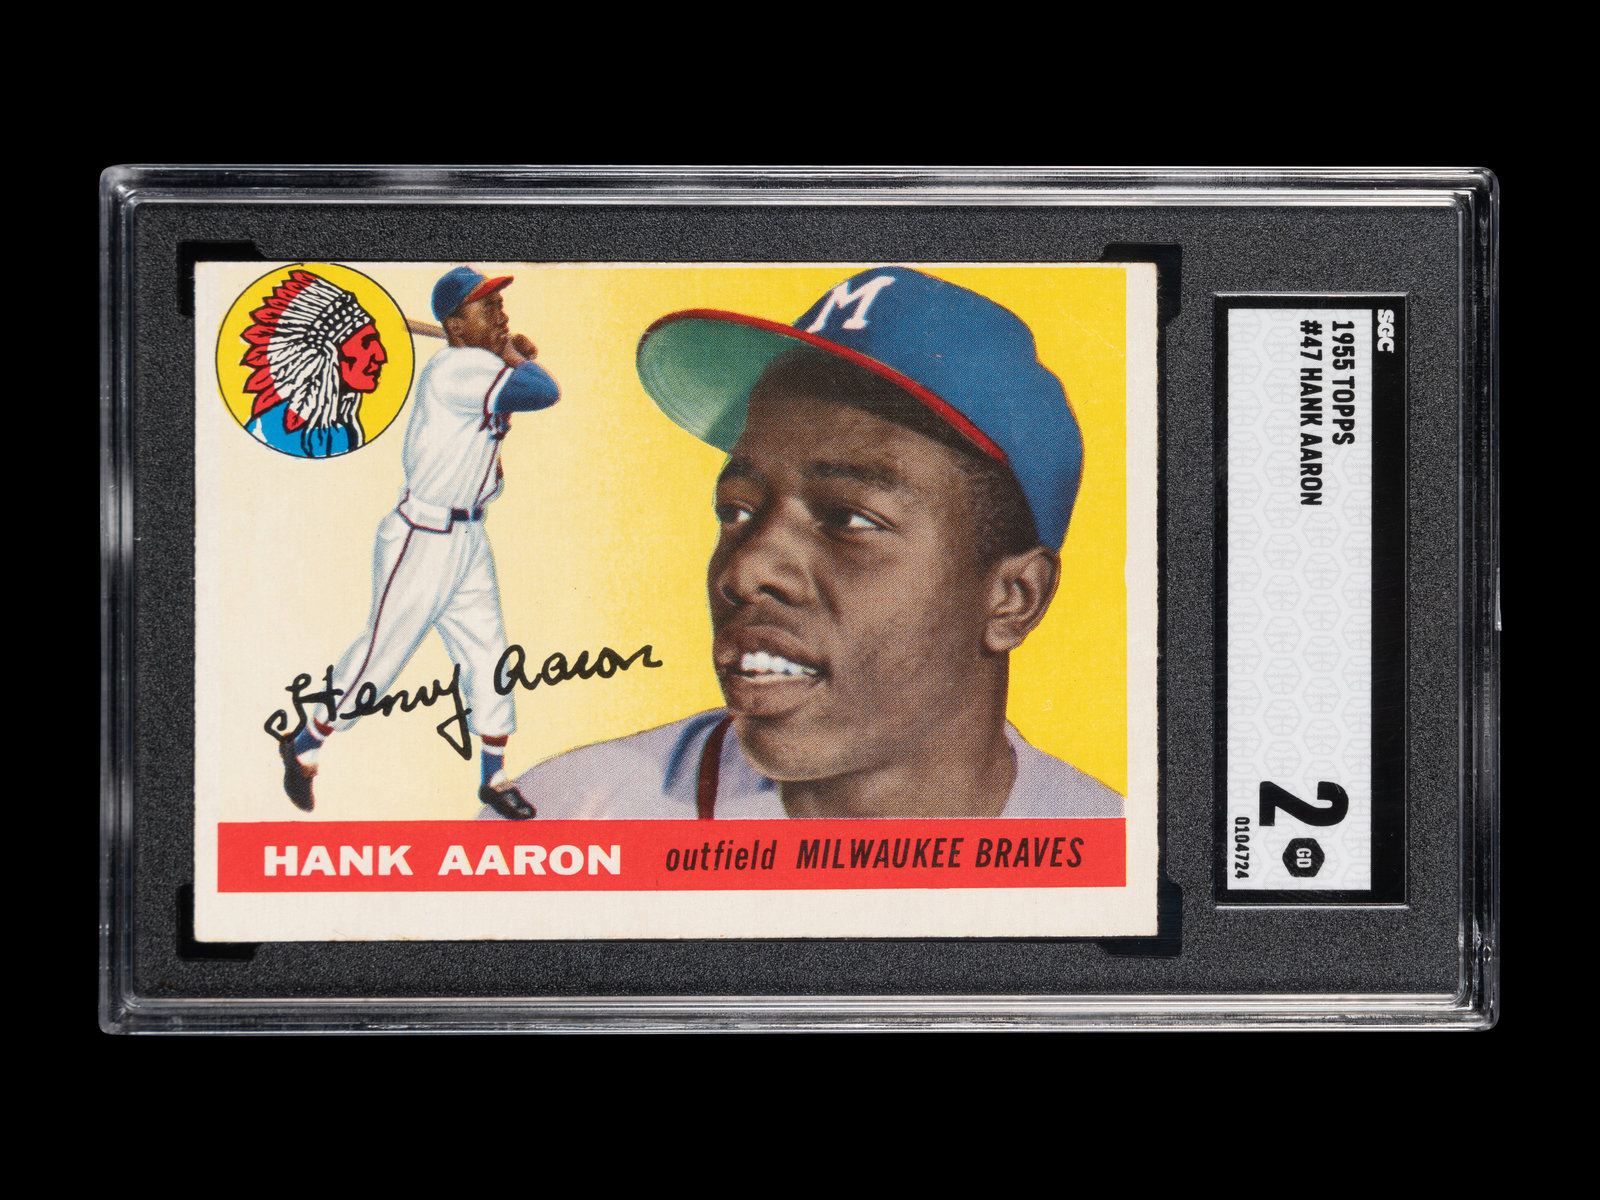 A 1955 Topps Hank Aaron Baseball Card No. 47 (SGC 2 GOOD)